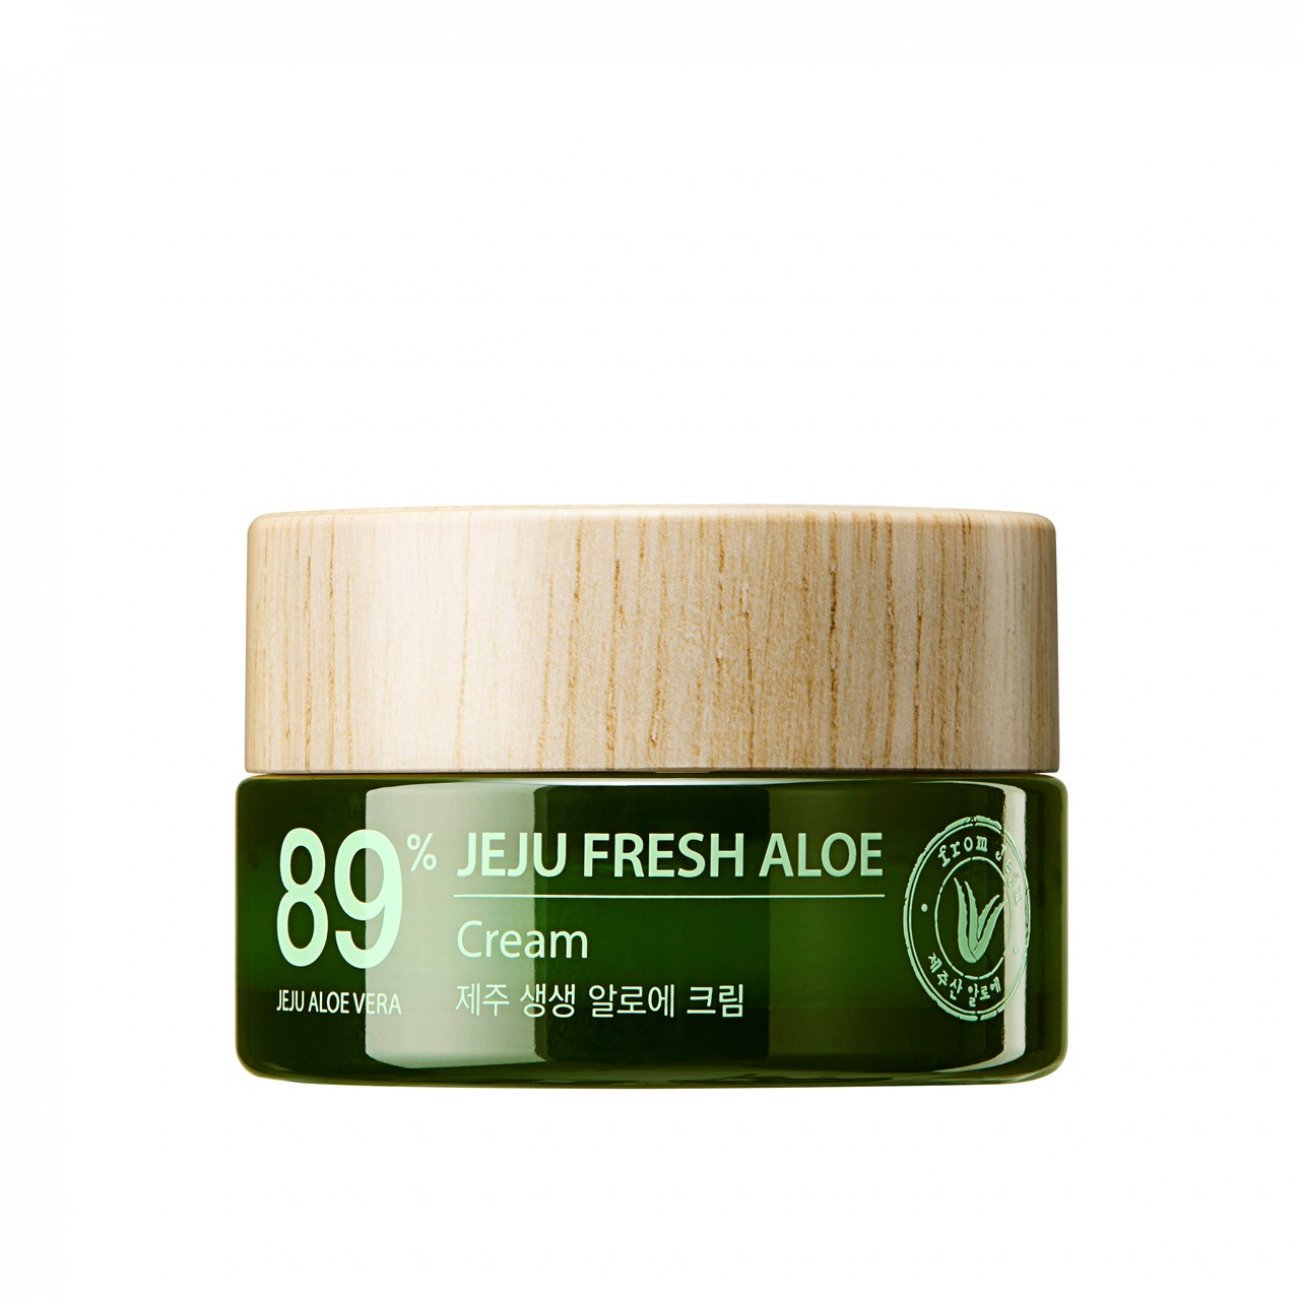 Jeju Fresh Aloe Cream 89% 50ml